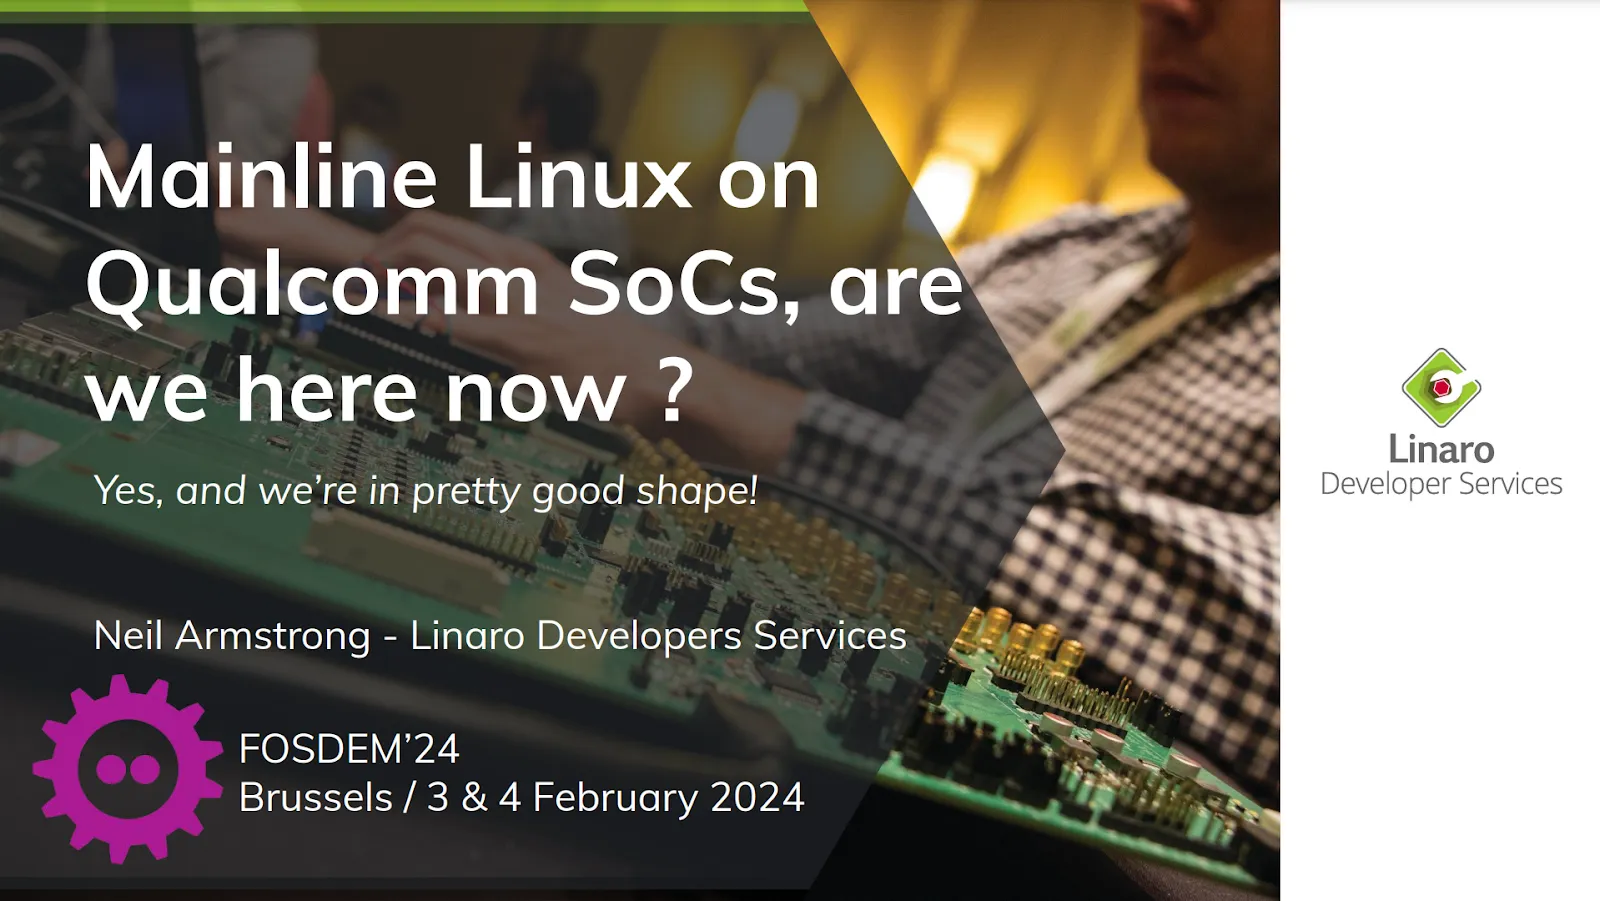 Neil talks about mainline linux status on Qualcomm SoCs in FOSDEM24